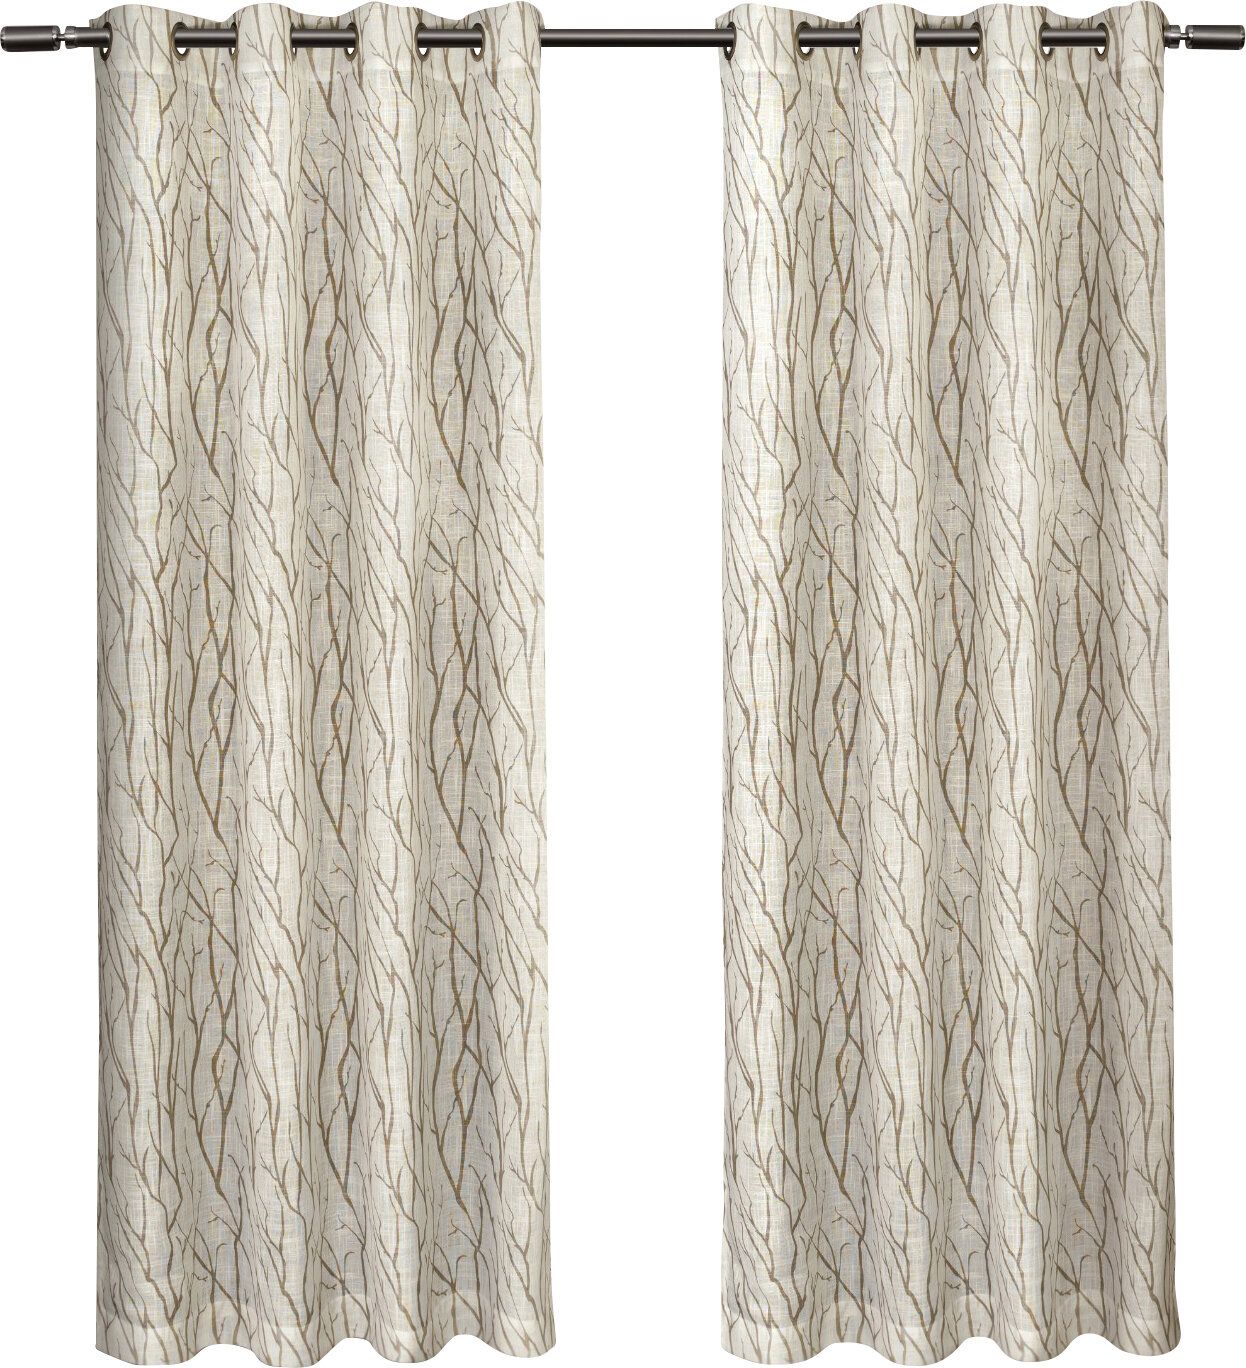 Leija Floral Sheer Grommet Curtain Panels Inside Oakdale Textured Linen Sheer Grommet Top Curtain Panel Pairs (View 17 of 20)